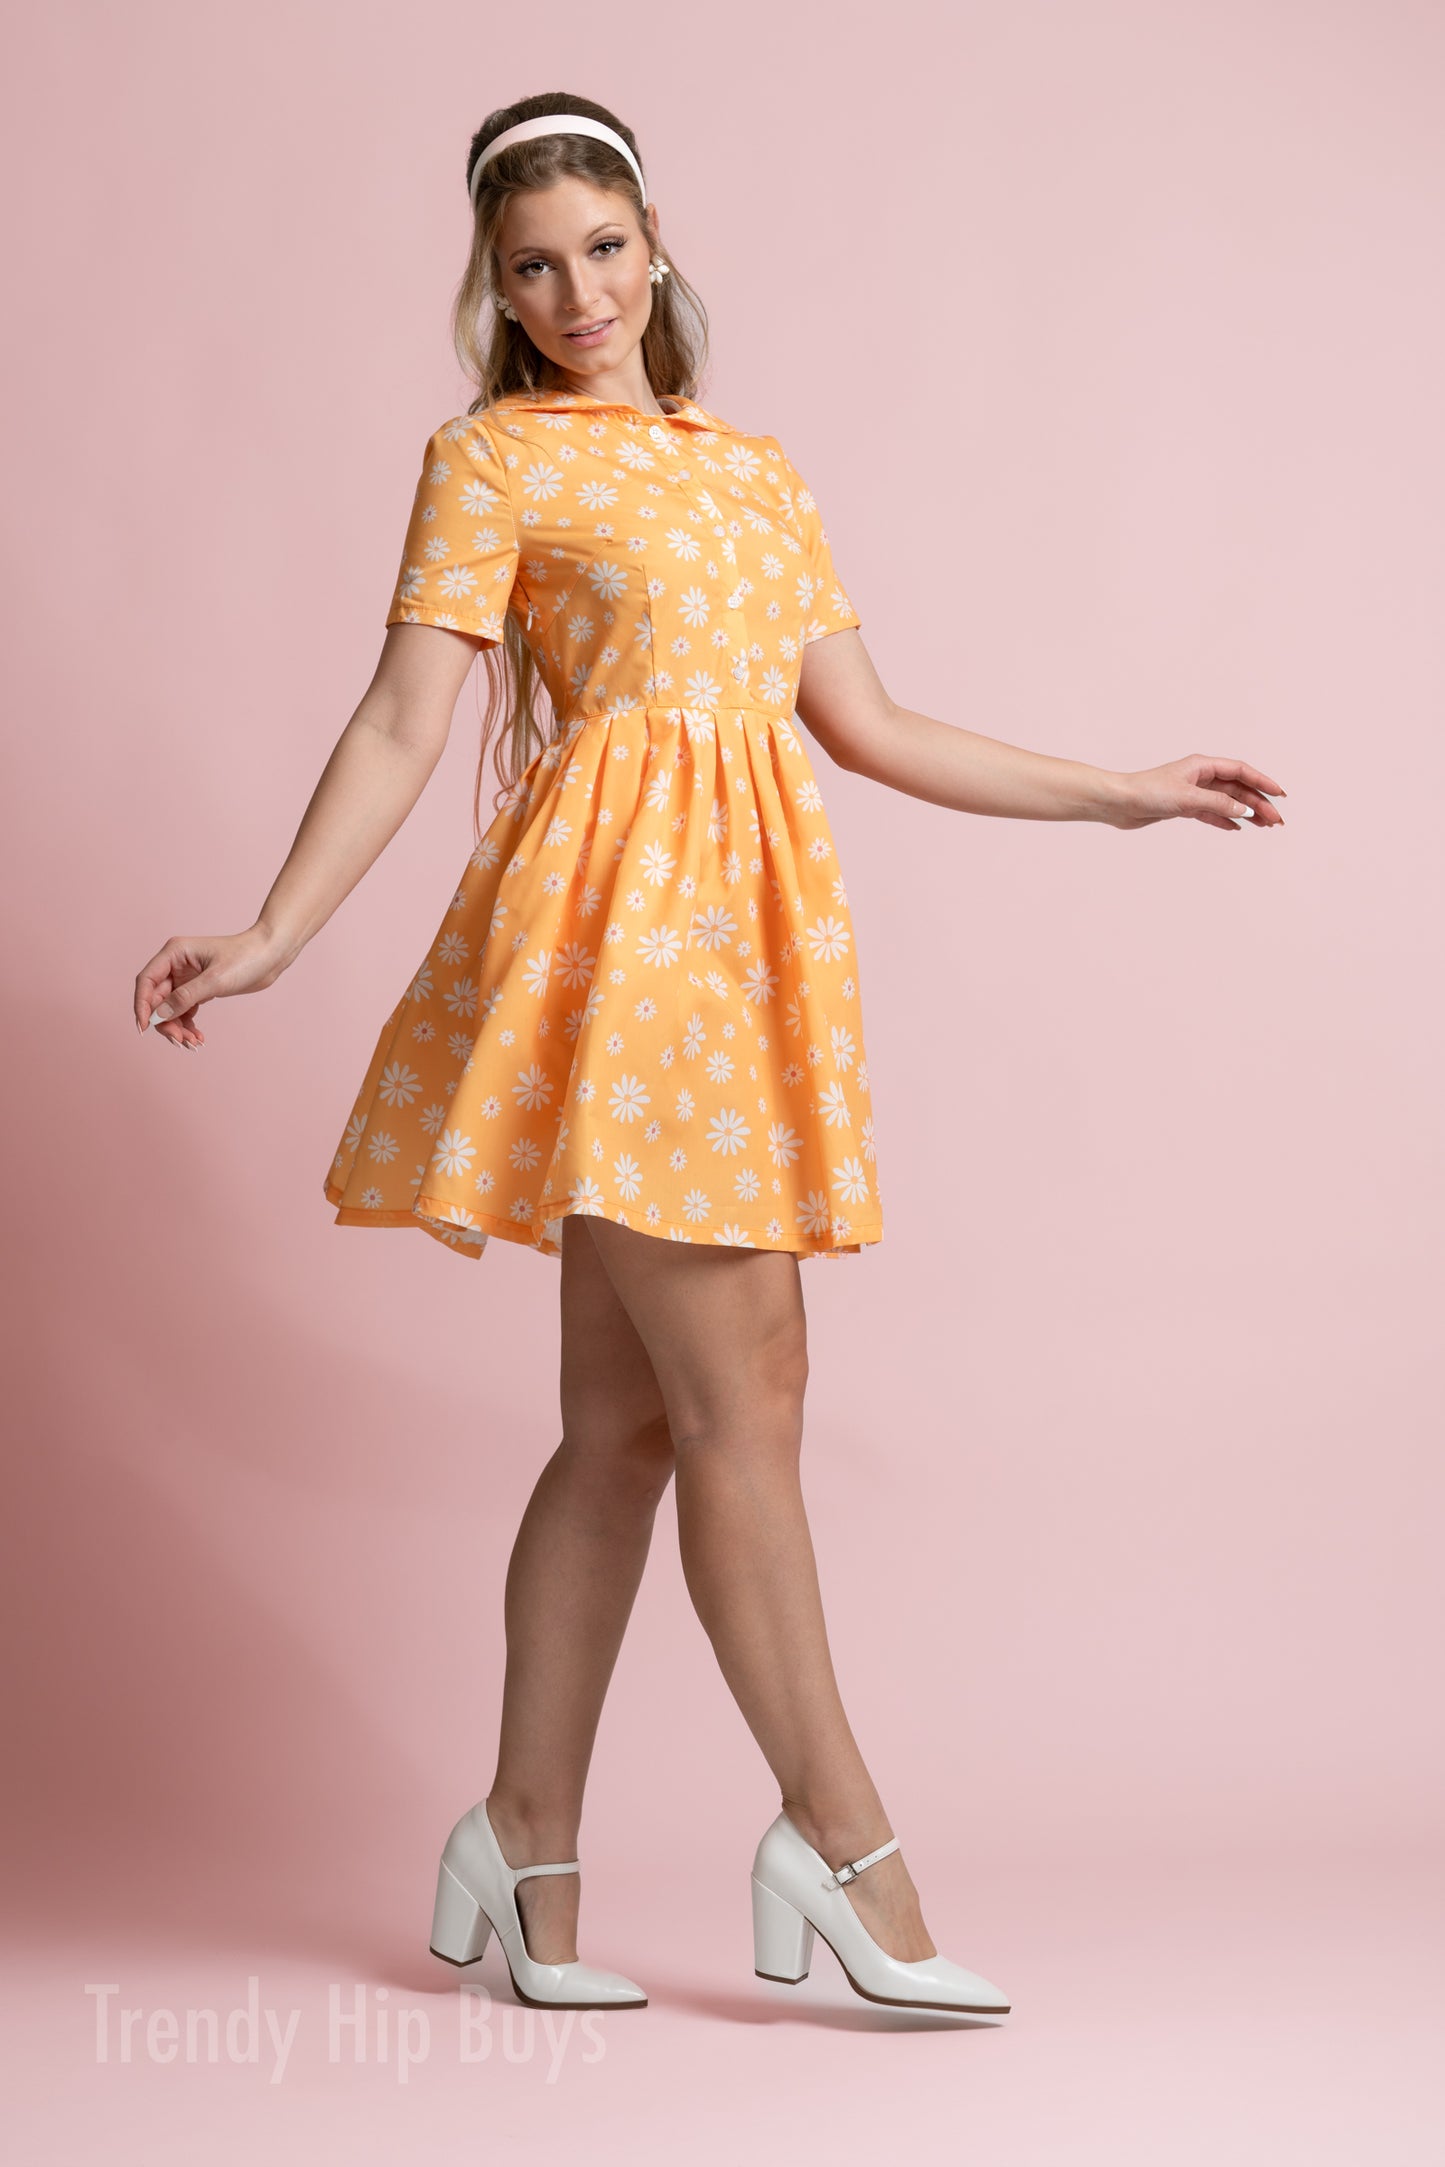 Vintage-Kleiderstil, Kleid im 50er-Jahre-Stil, gelbes Blumenkleid, Retro-Kleid, gelbes Sonnenkleid, Rockabilly-Kleid, Matrosenkleid, Pin-Up-Kleid